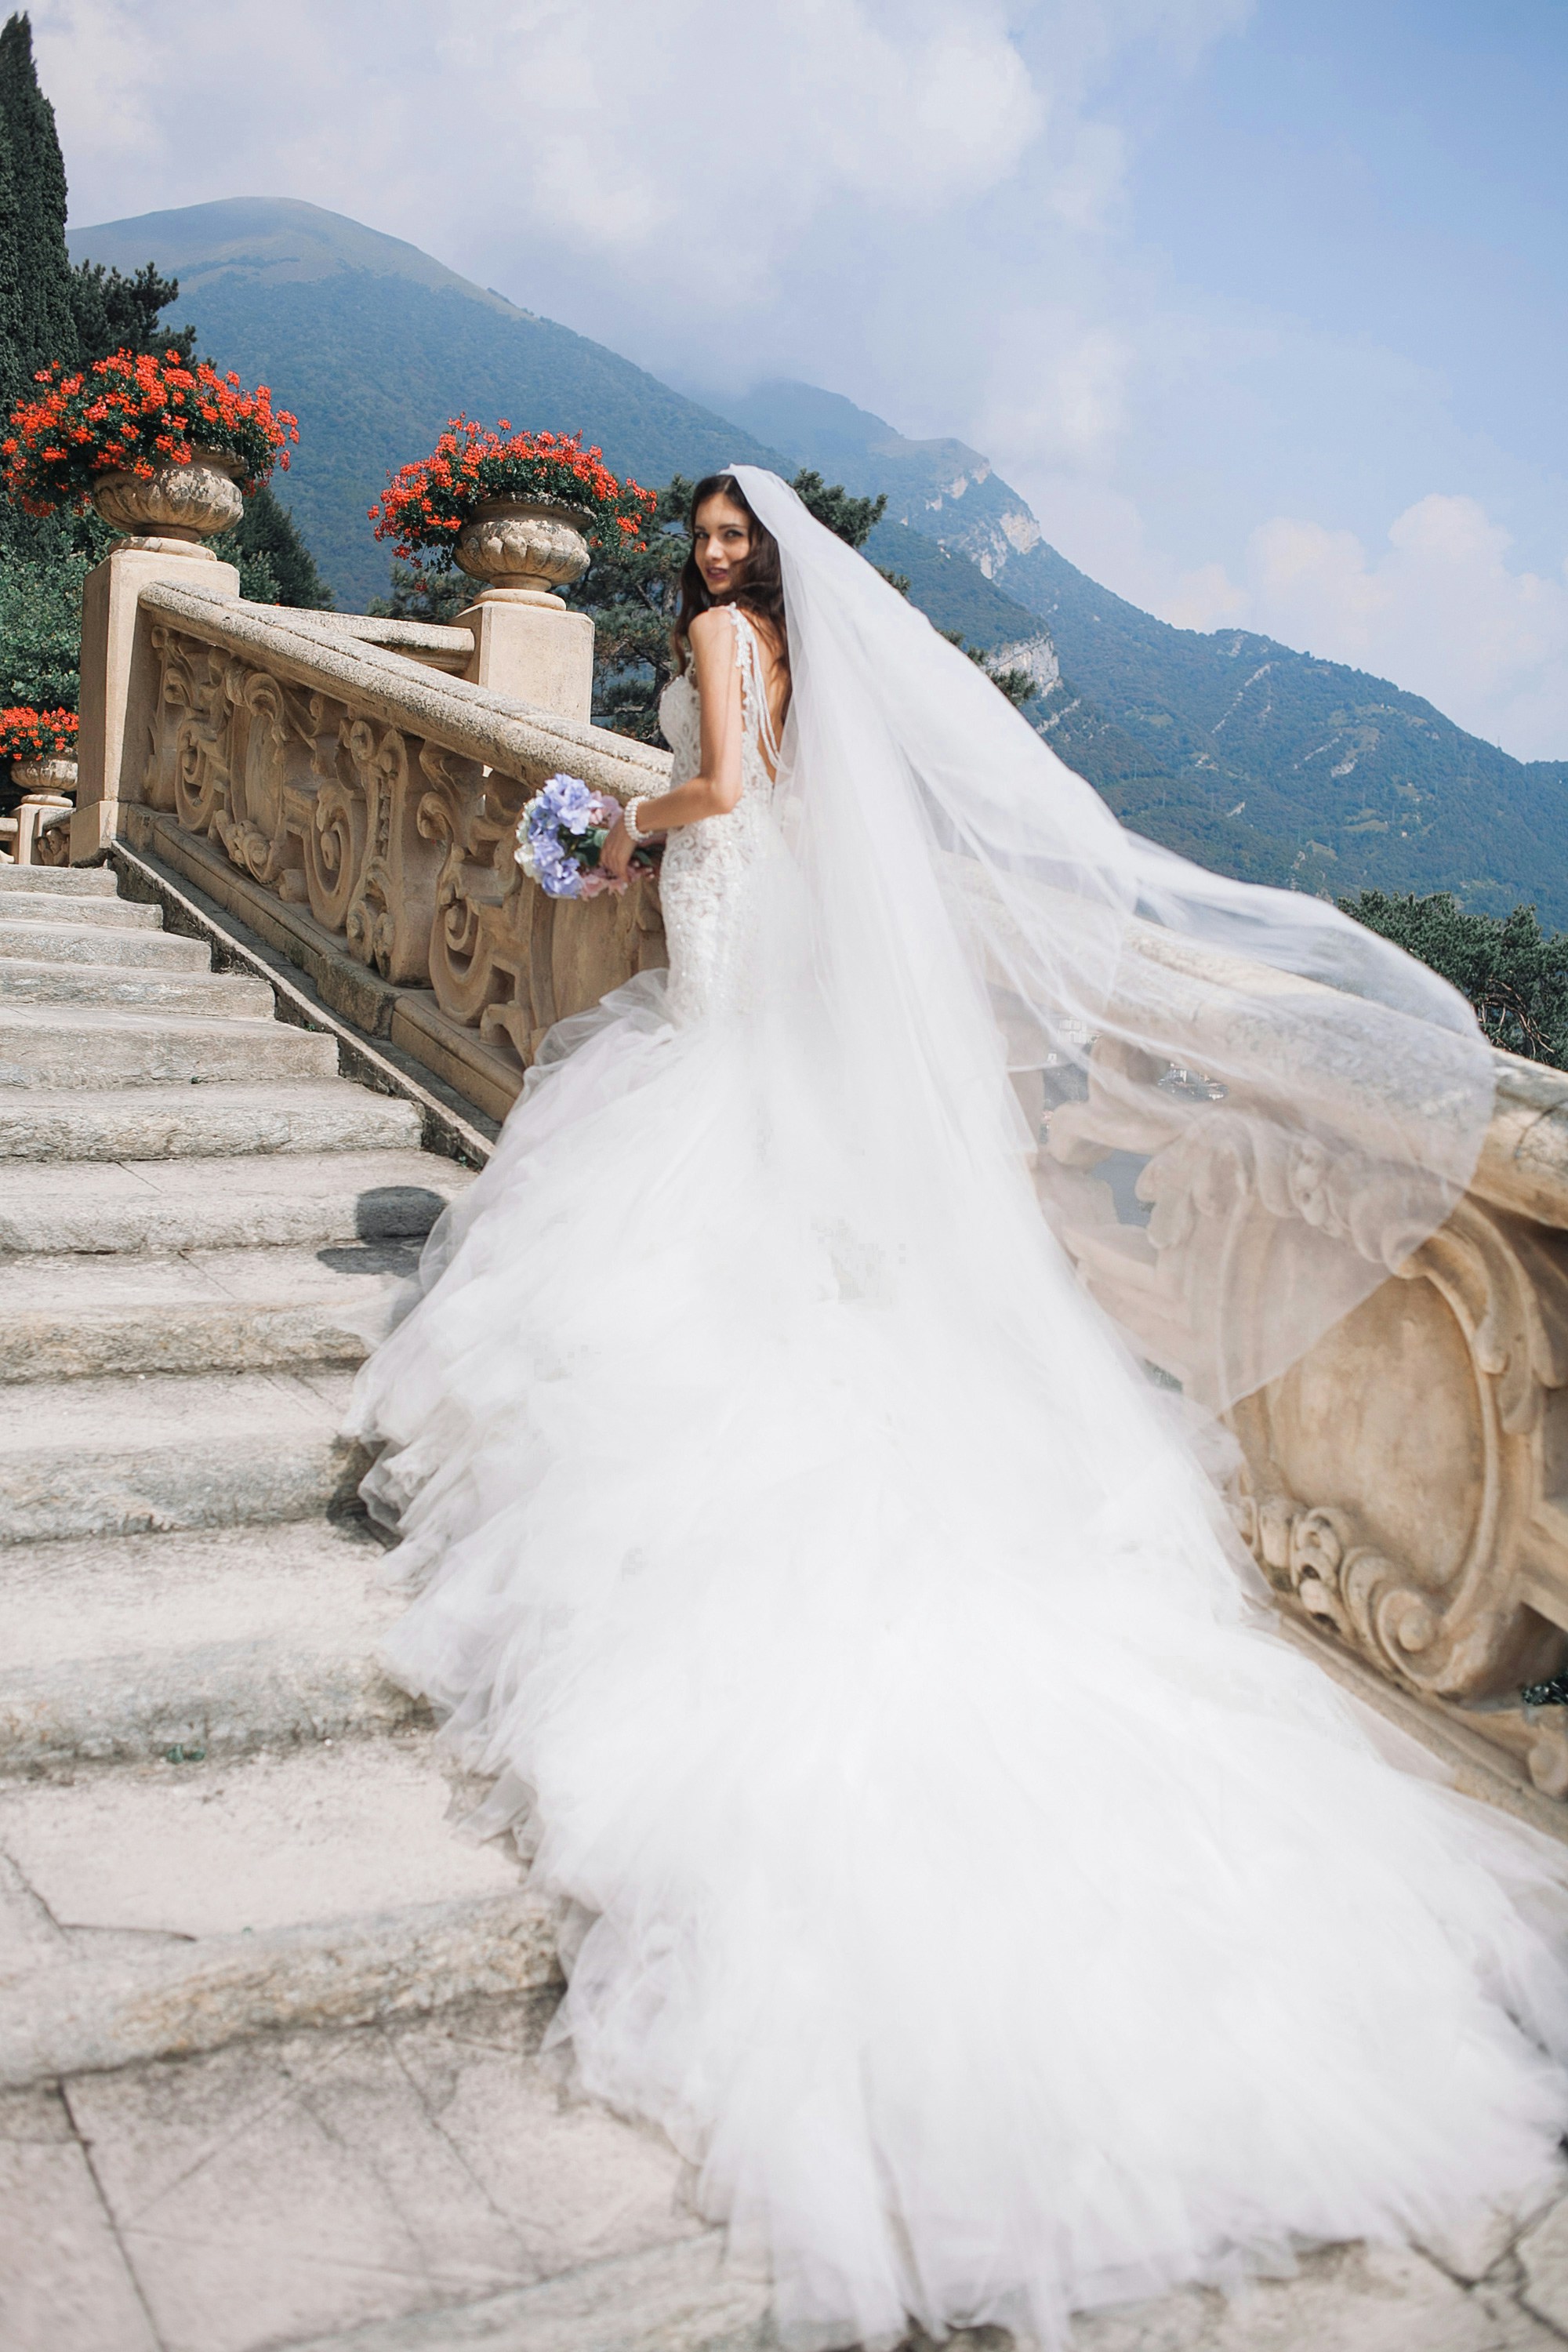 bride in white gown